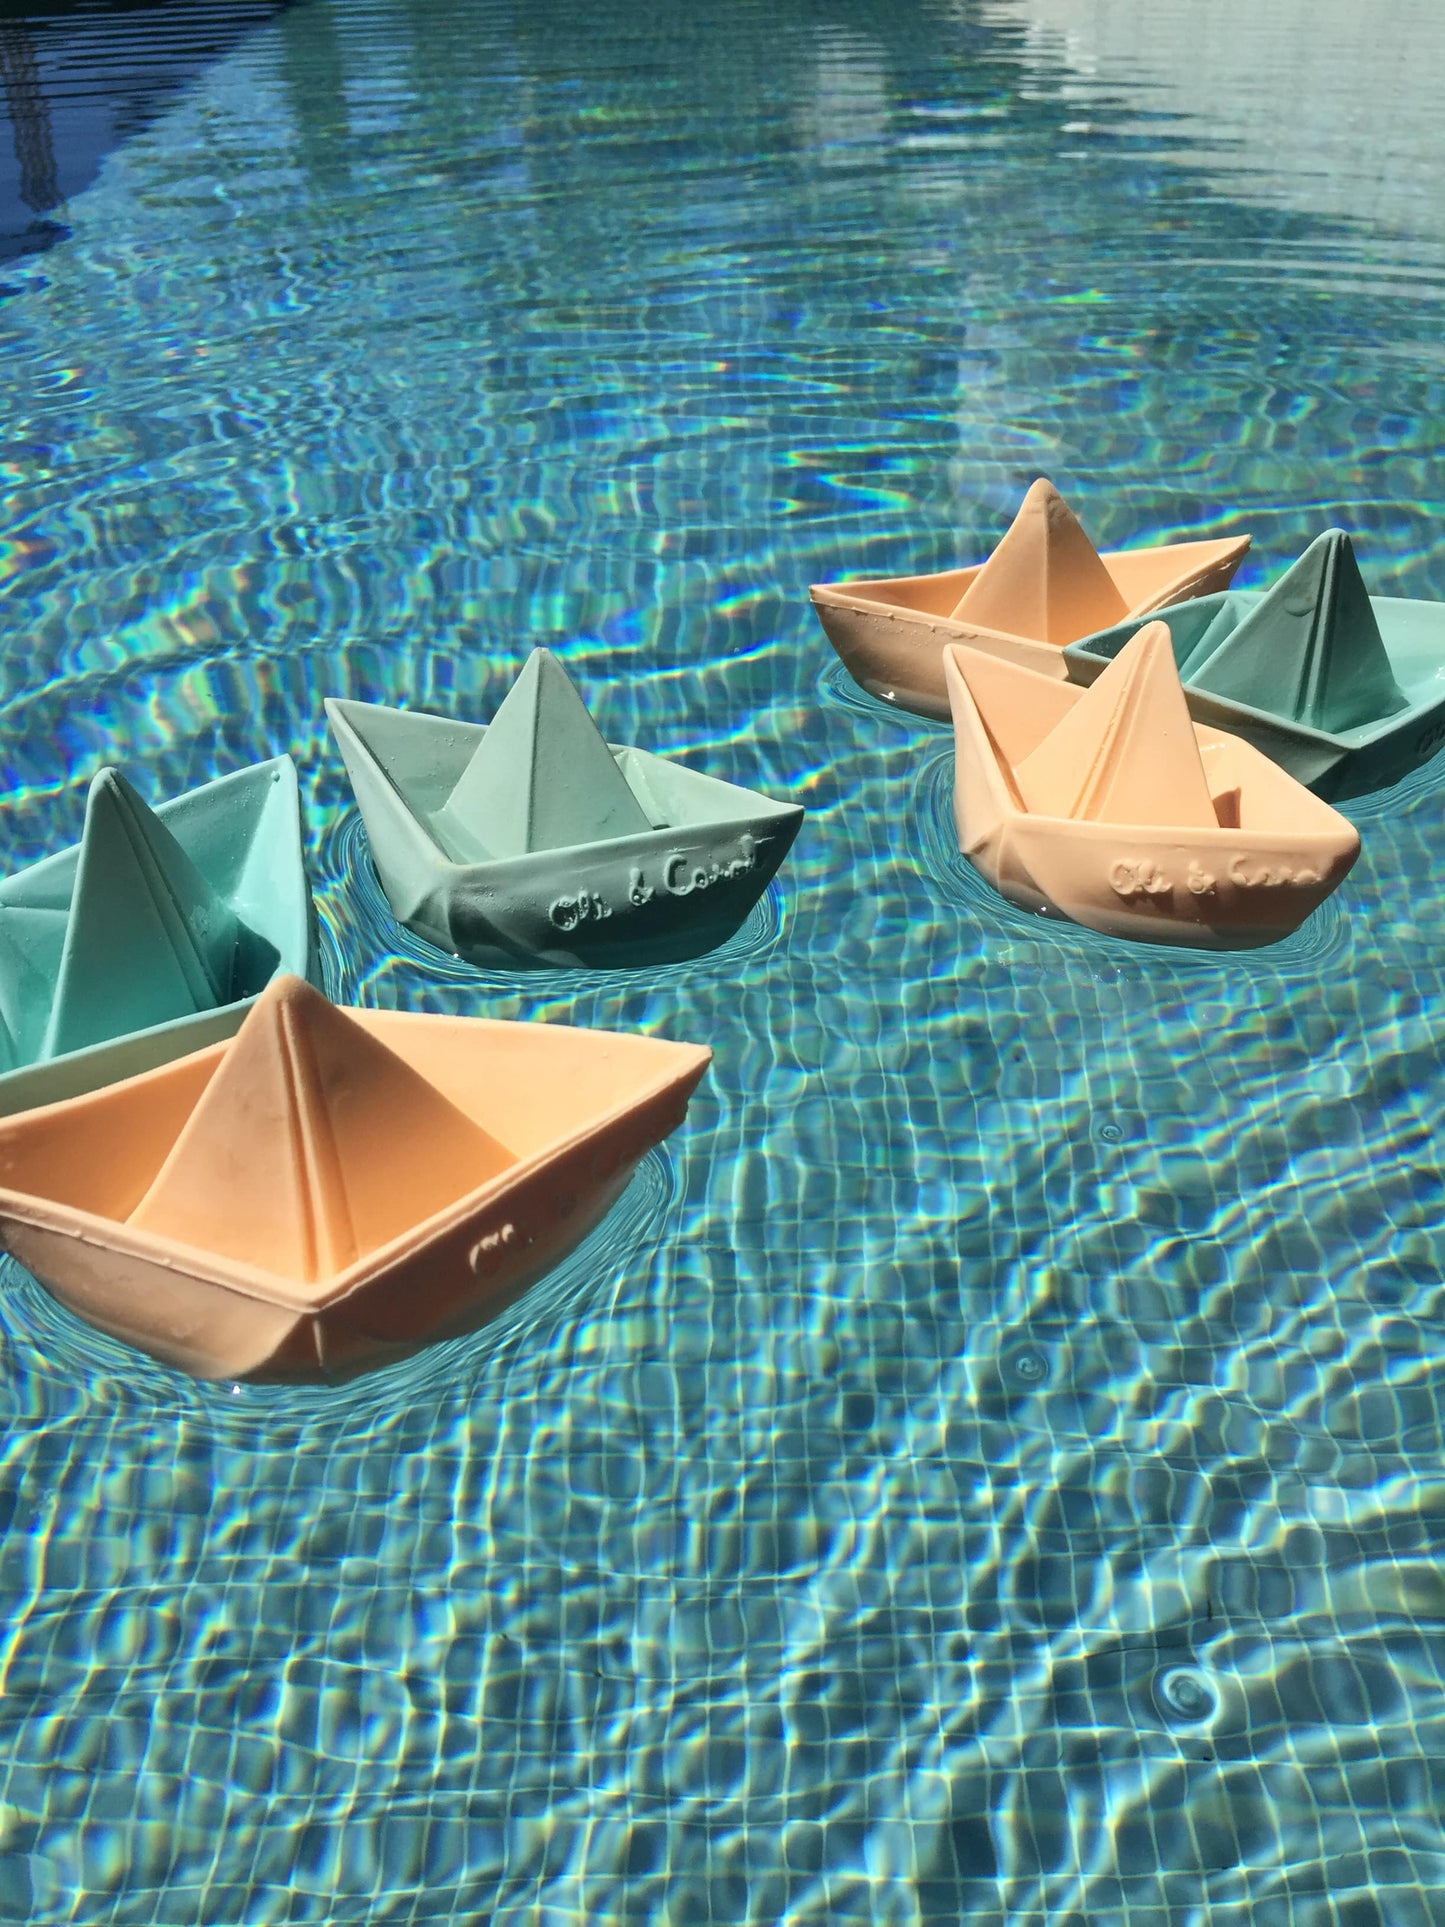 Barco Origami Menta- Barcos Origami